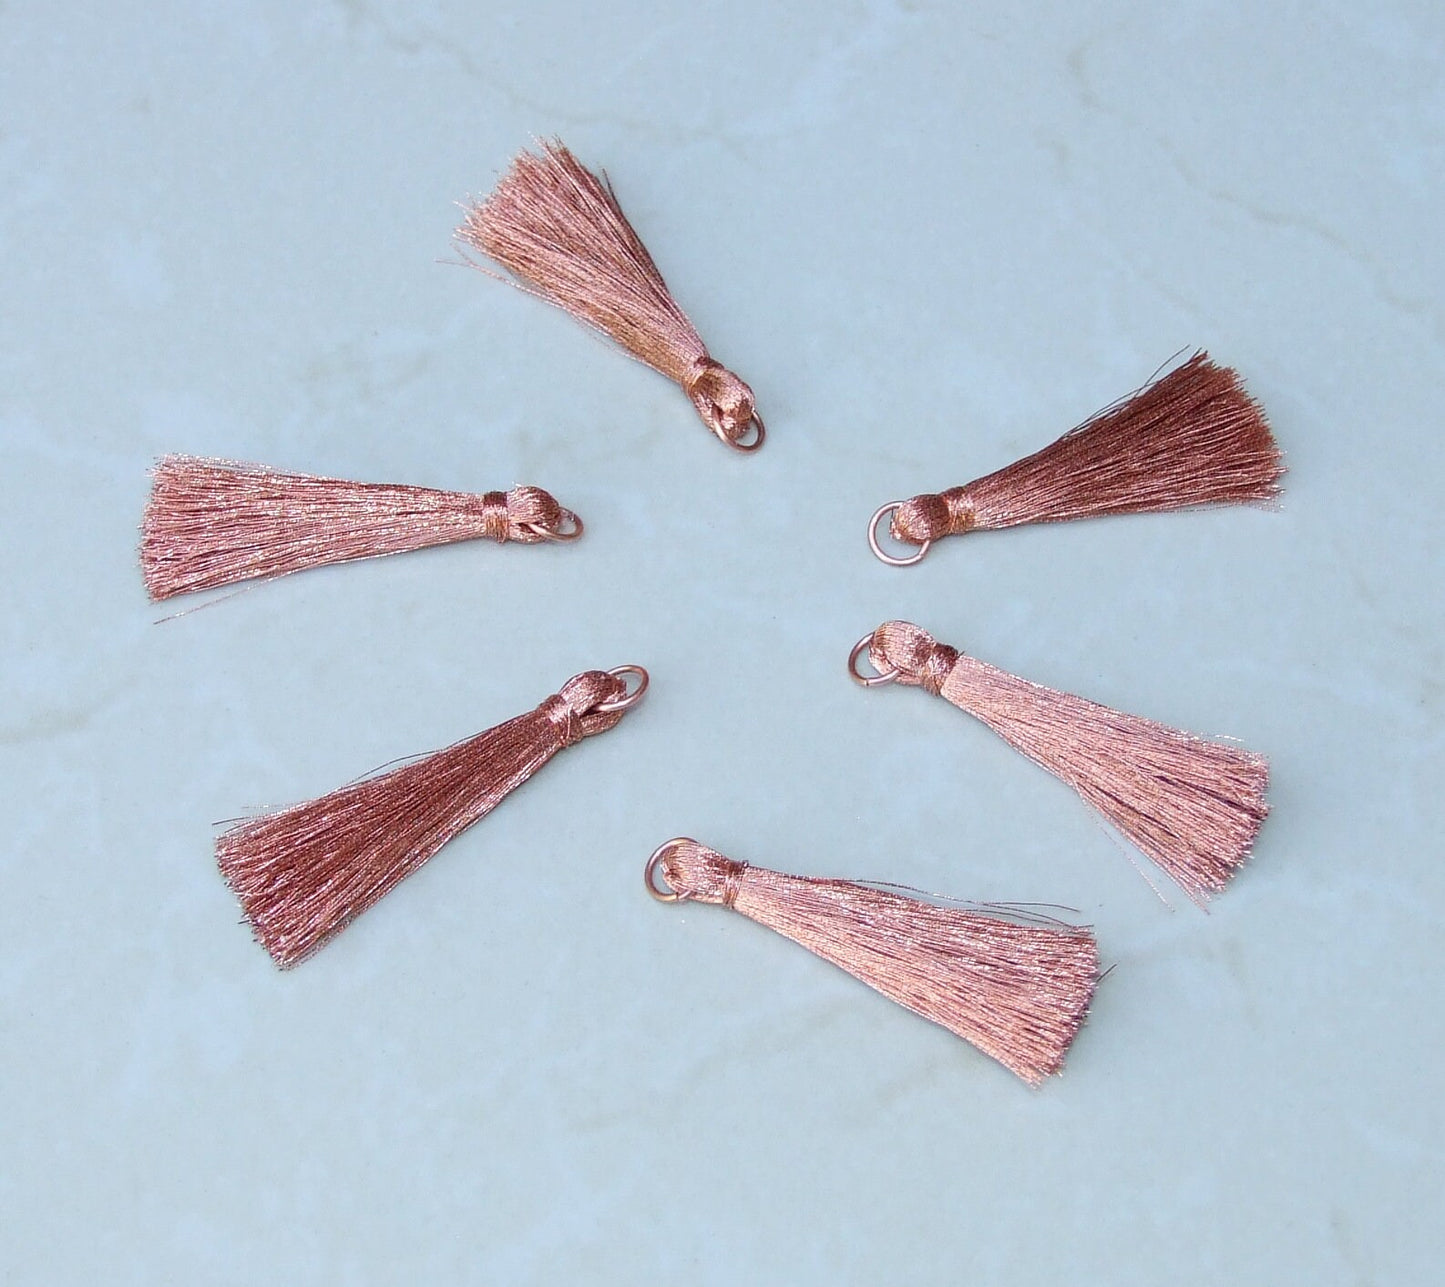 Copper Metallic Thread Tassel, Hand Made in the USA, 9mm Jump Ring, Embroidery Thread, Tassel Pendant - 2-1/4 inch Tassel